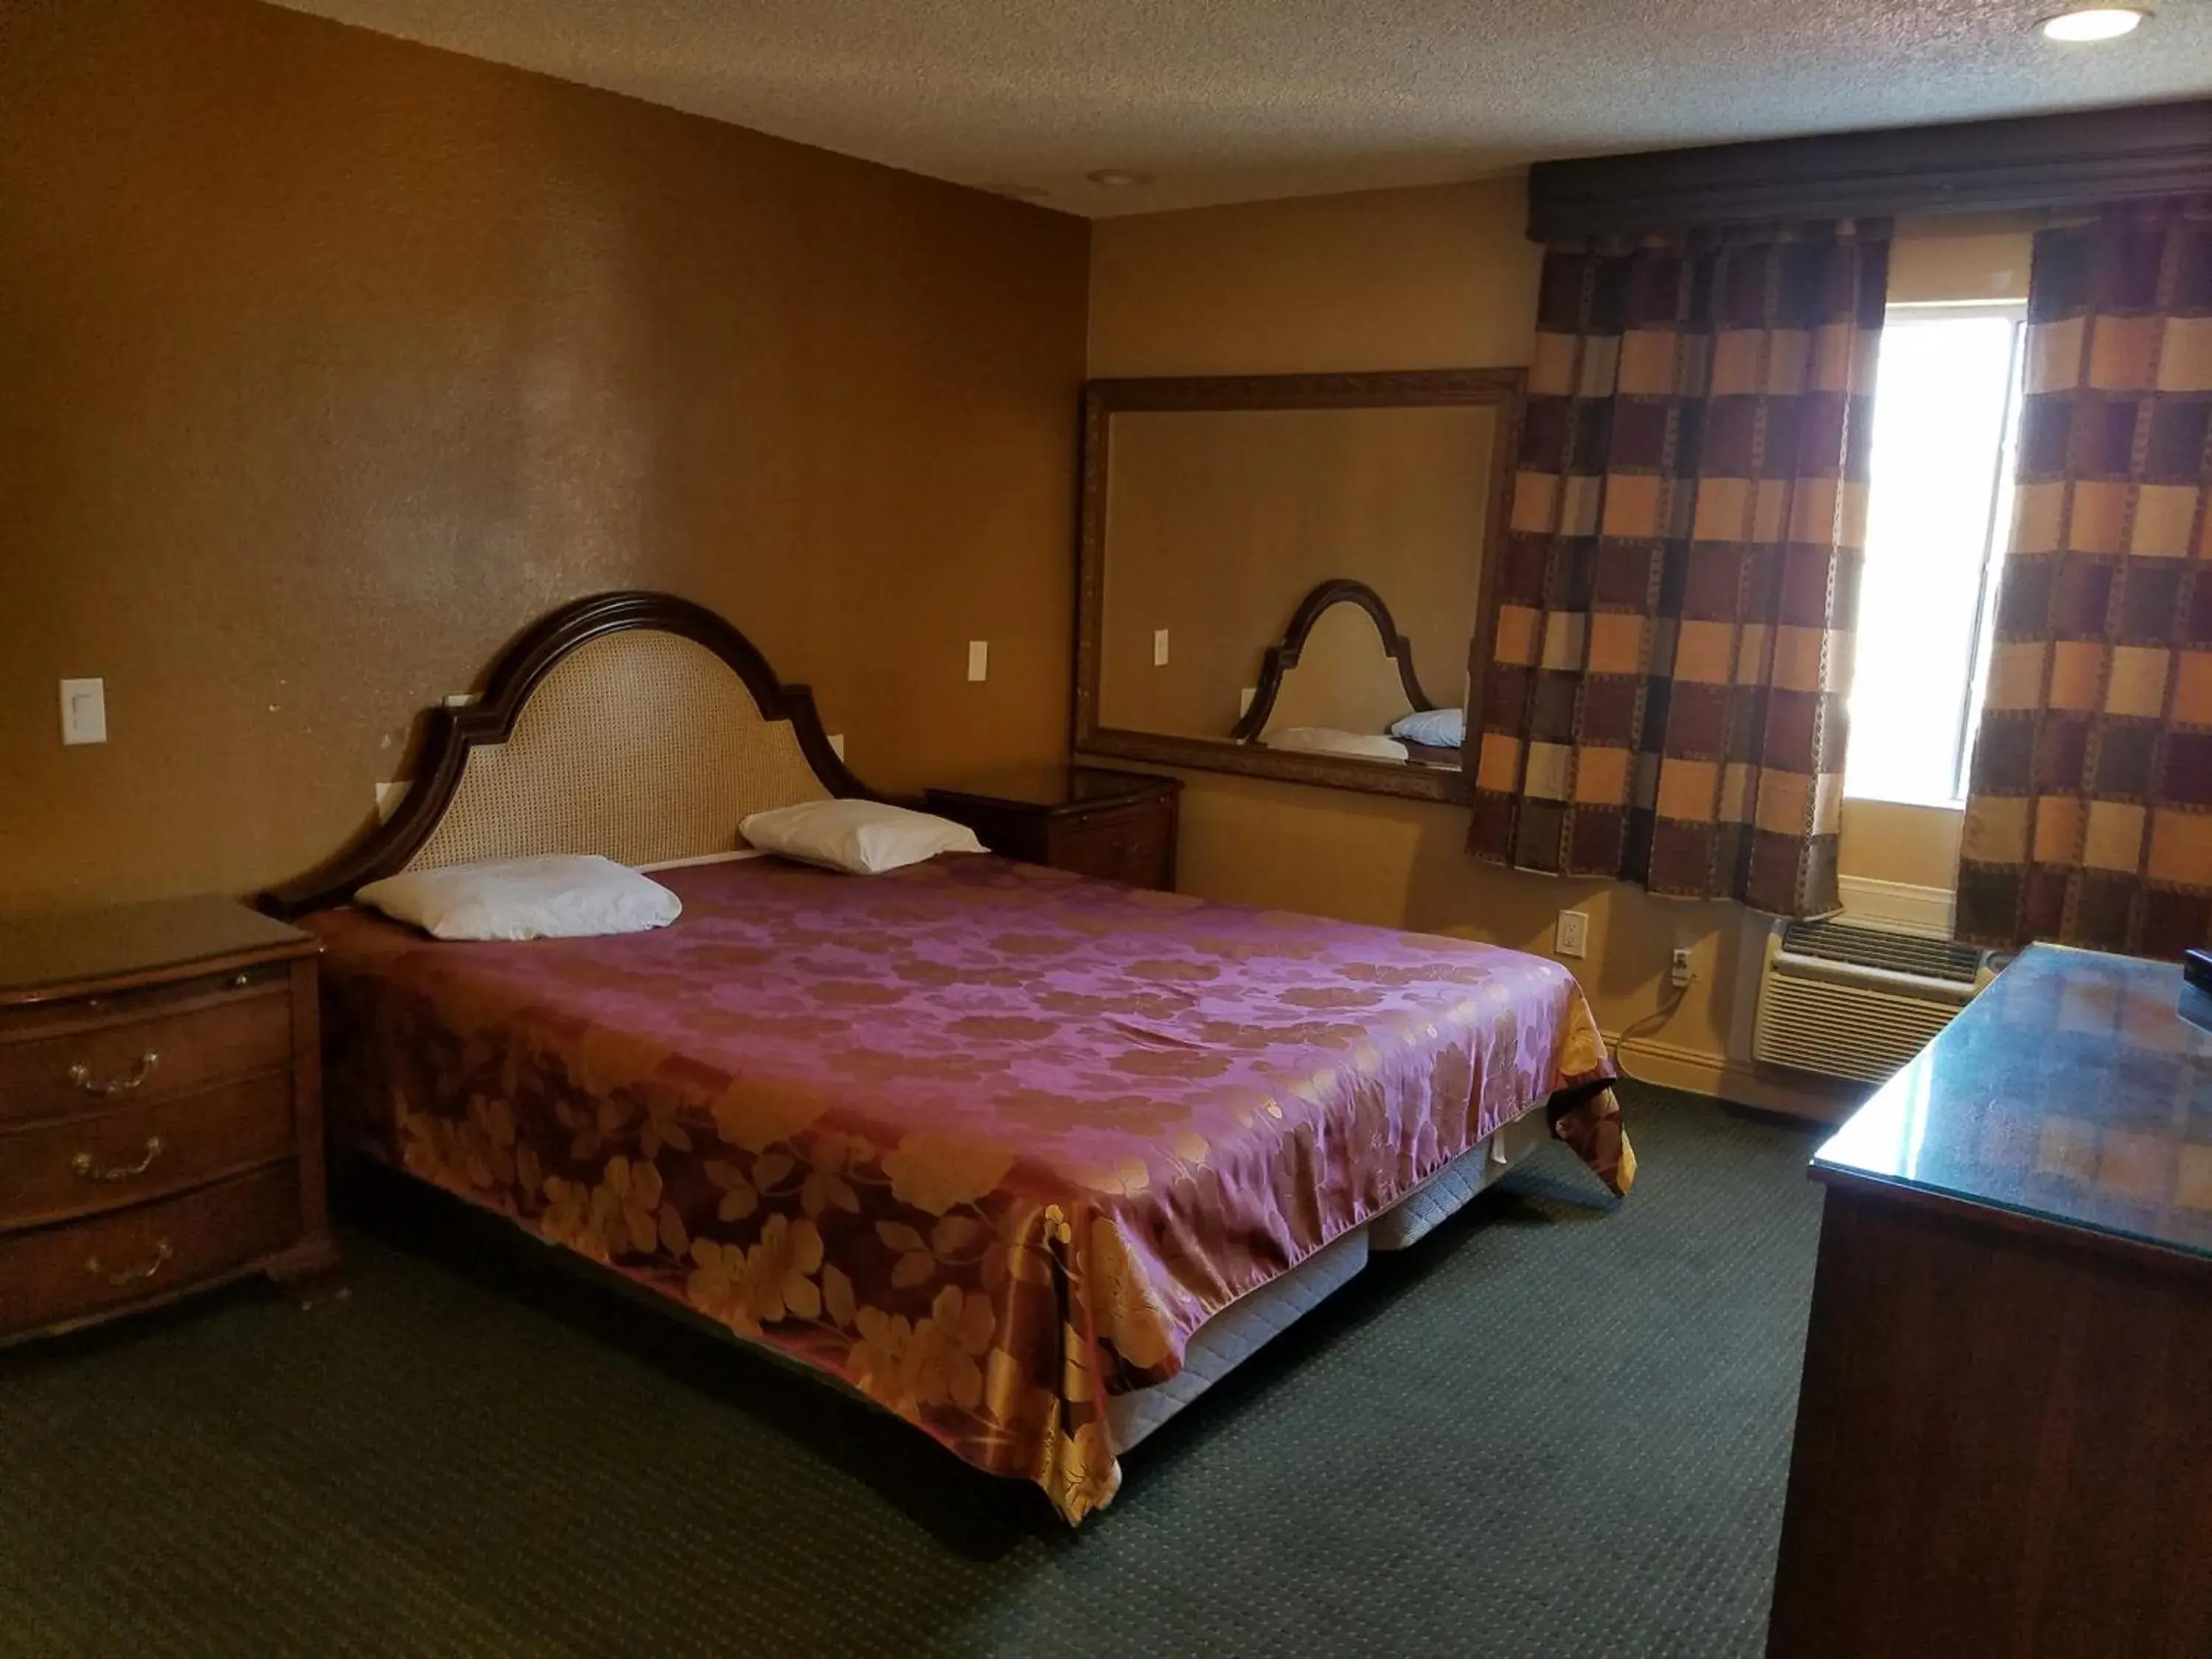 Bed, Room Photo in Central Inn Motel